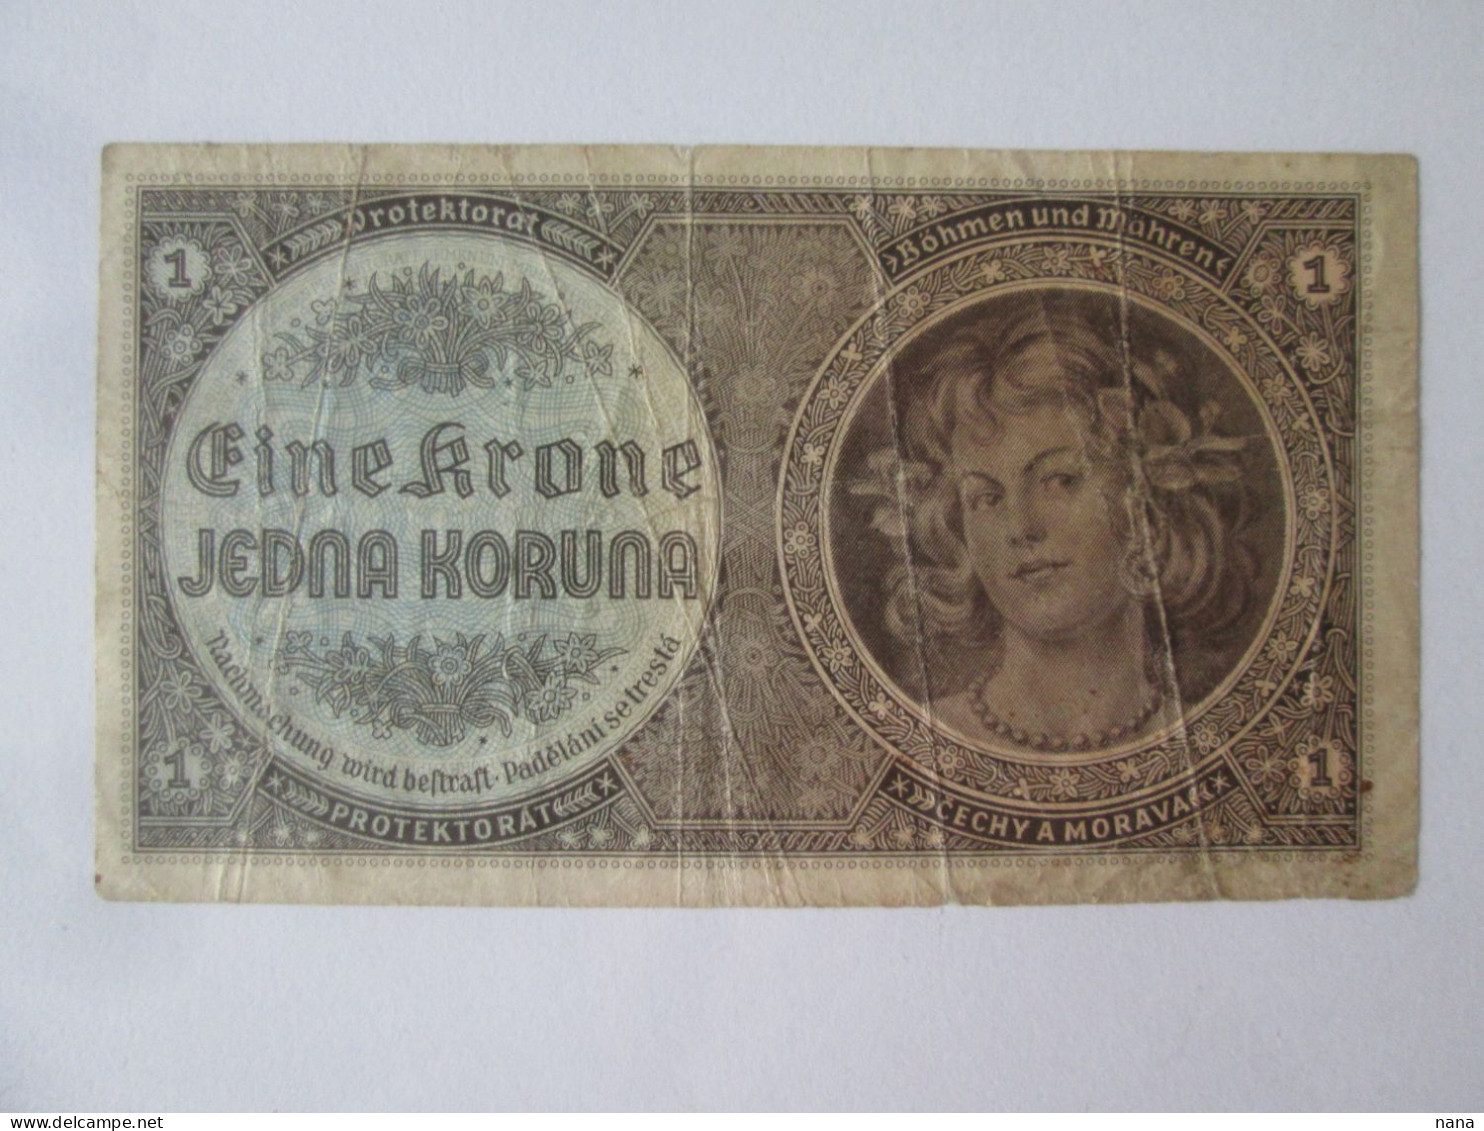 Bohemia & Moravia Protektorat 1 Koruna 1940 Banknote German Occupation WWII Series D 030,see Pictures - Tschechoslowakei